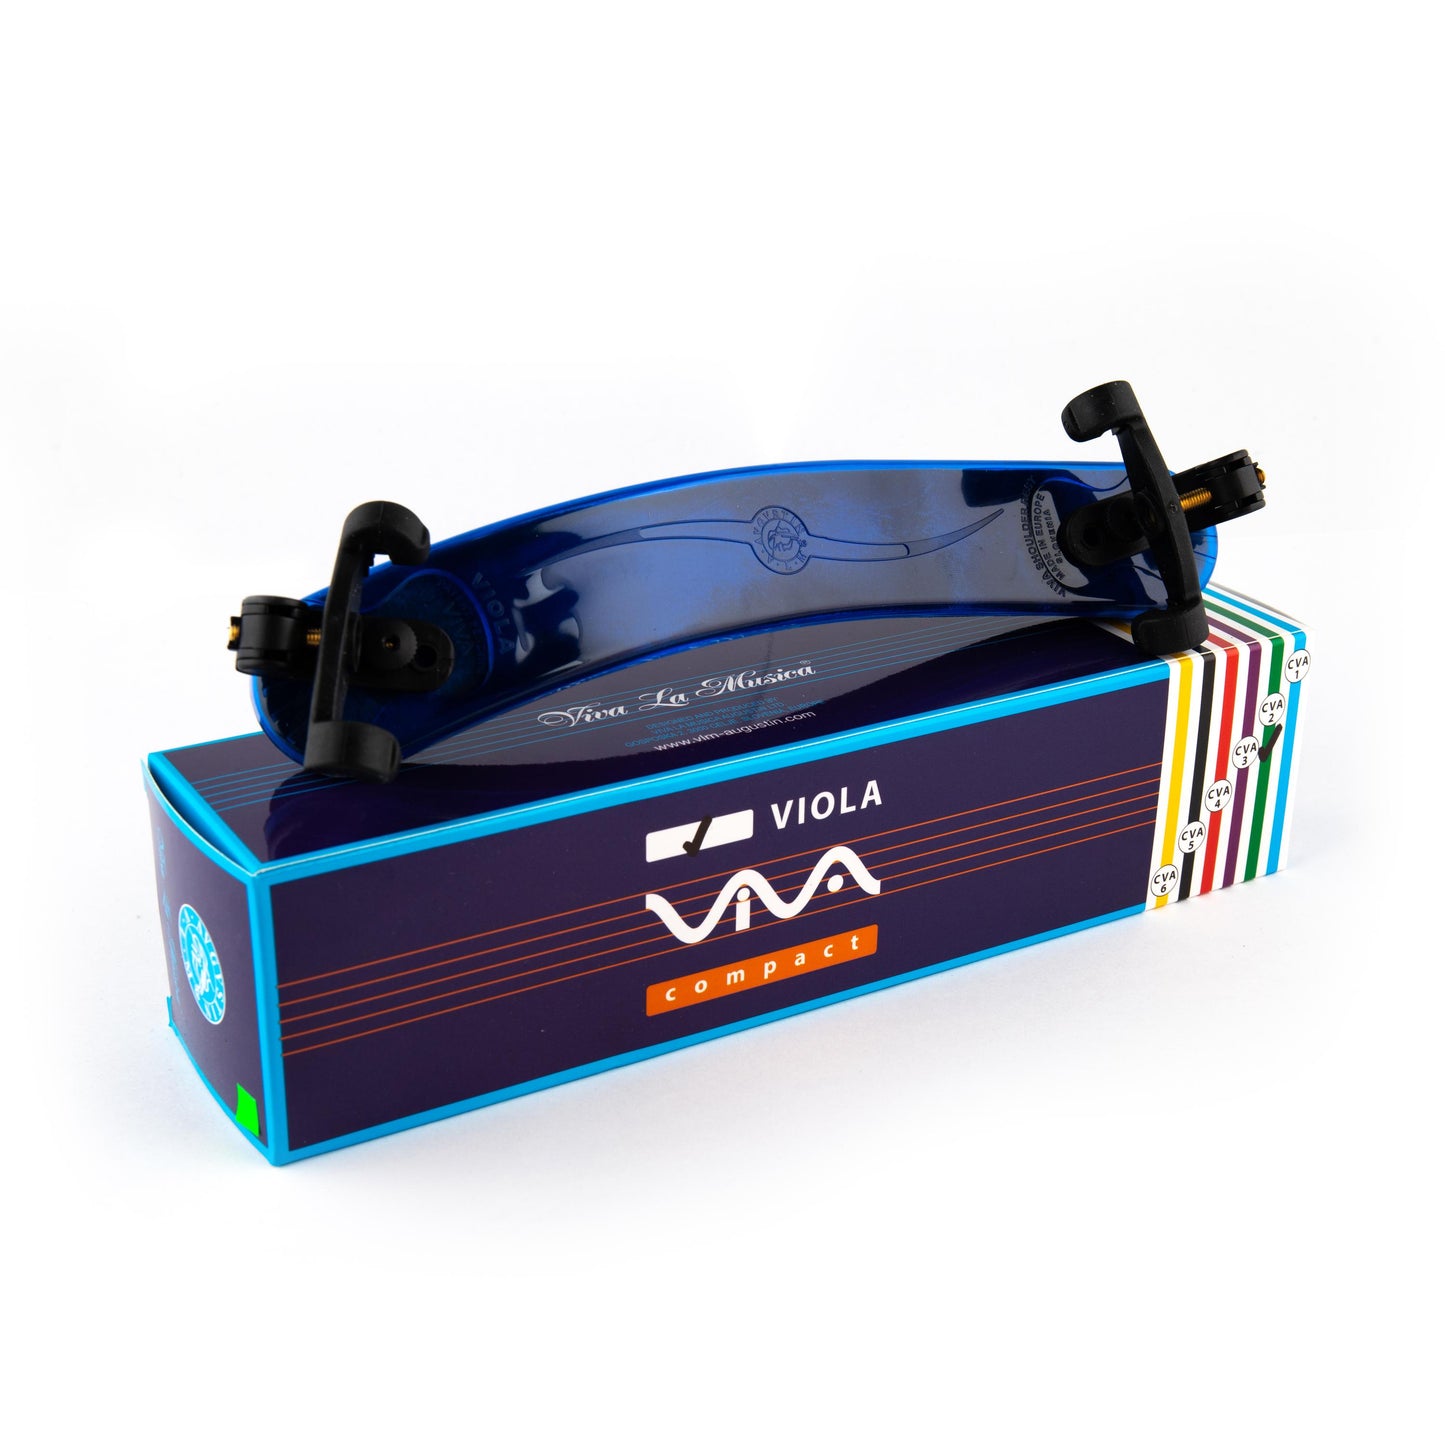 VLM Viola Compact Original Shoulder Rest